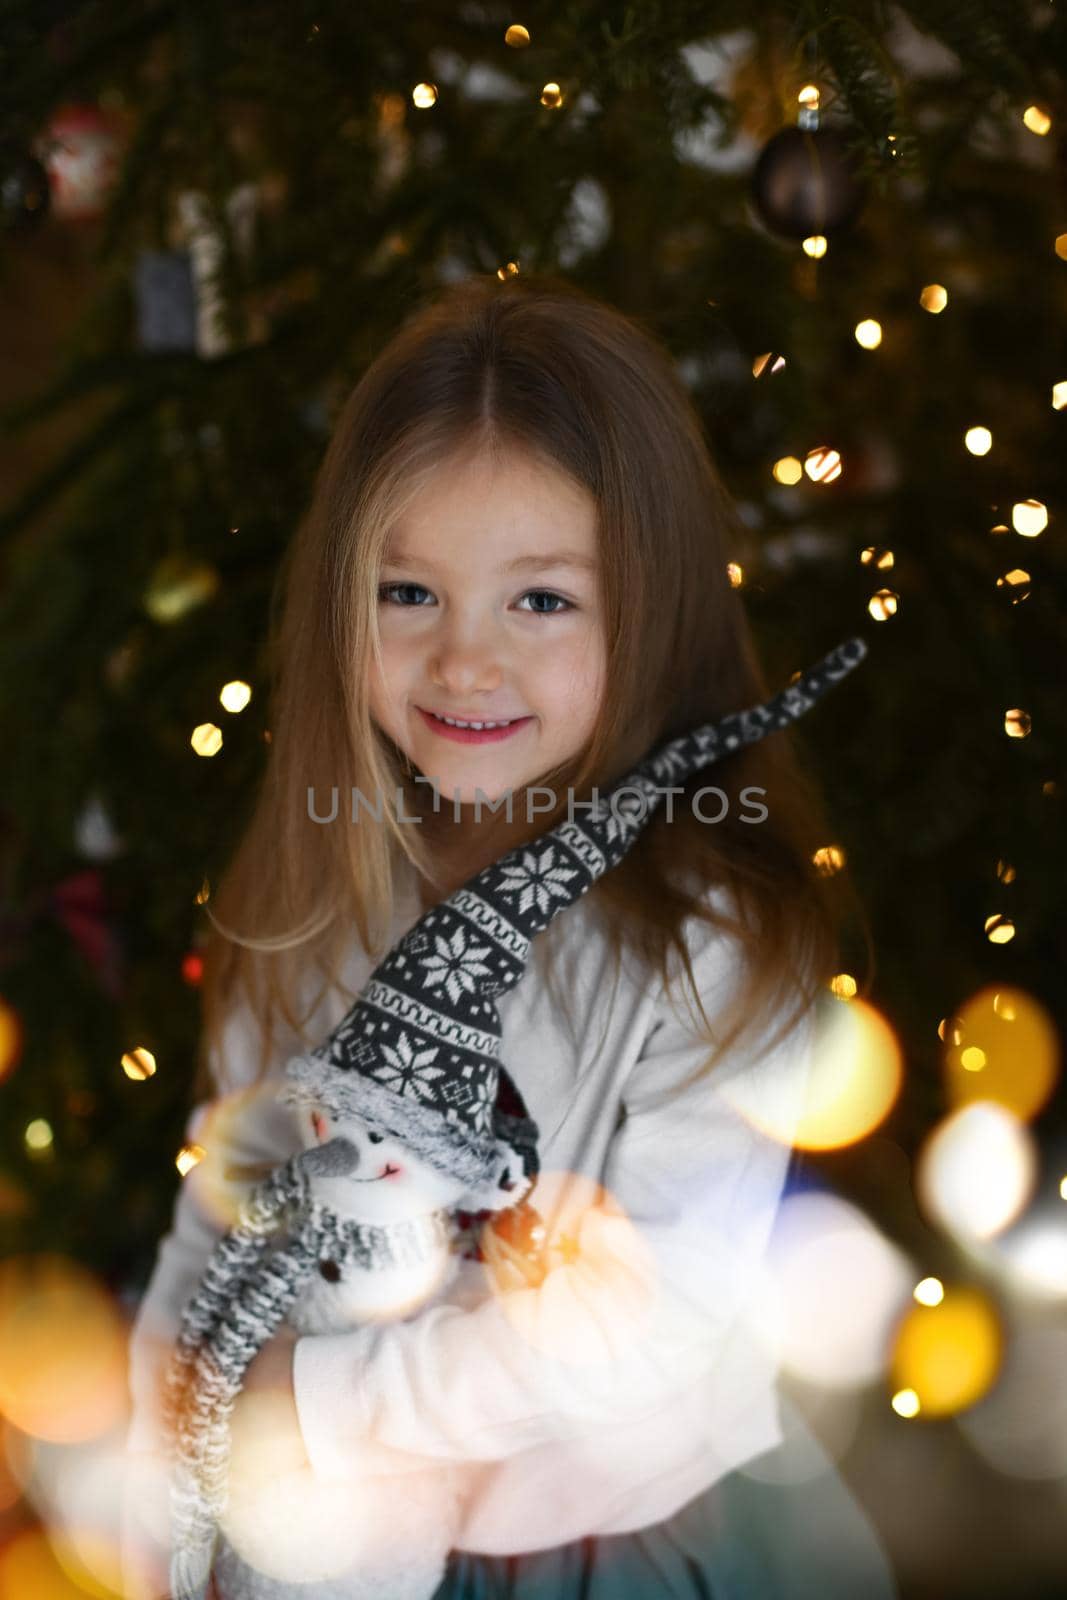 A girl hugging a snowman toy near a Christmas tree